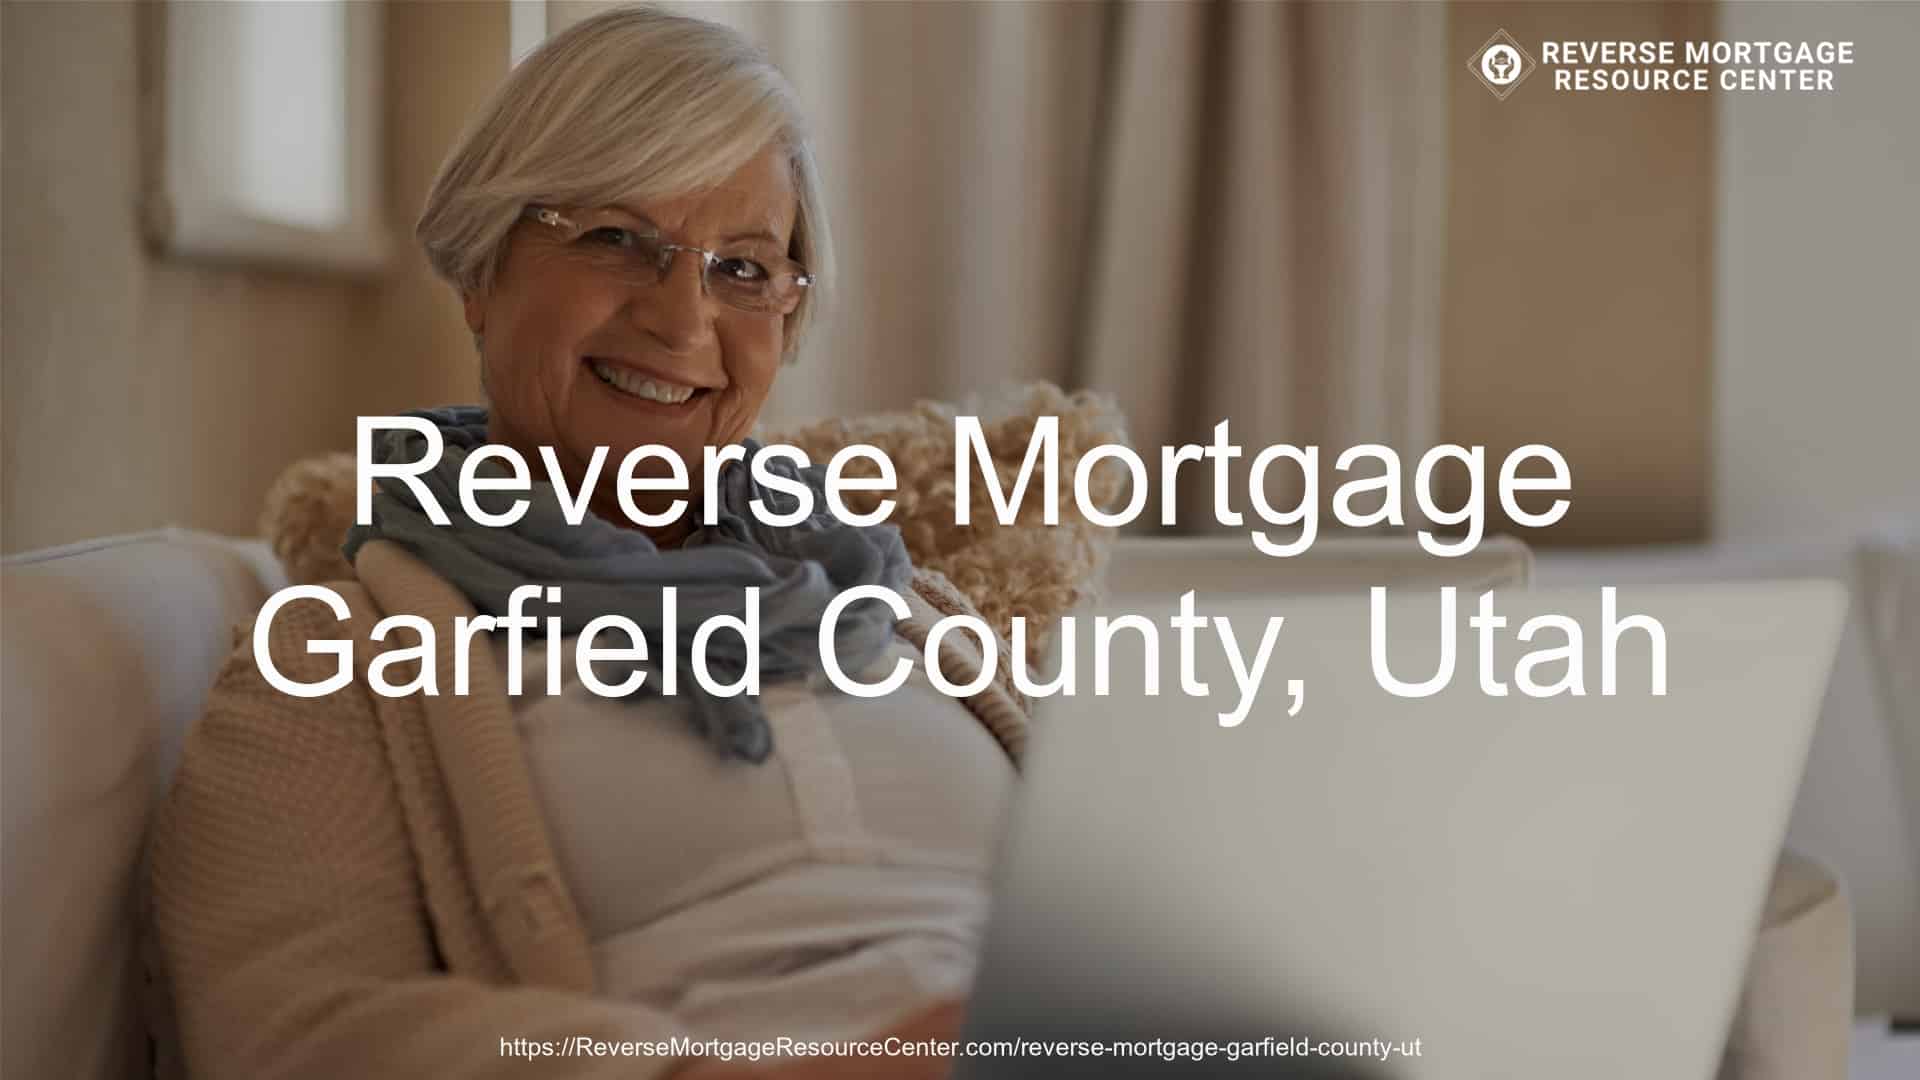 Reverse Mortgage Loans in Garfield County Utah